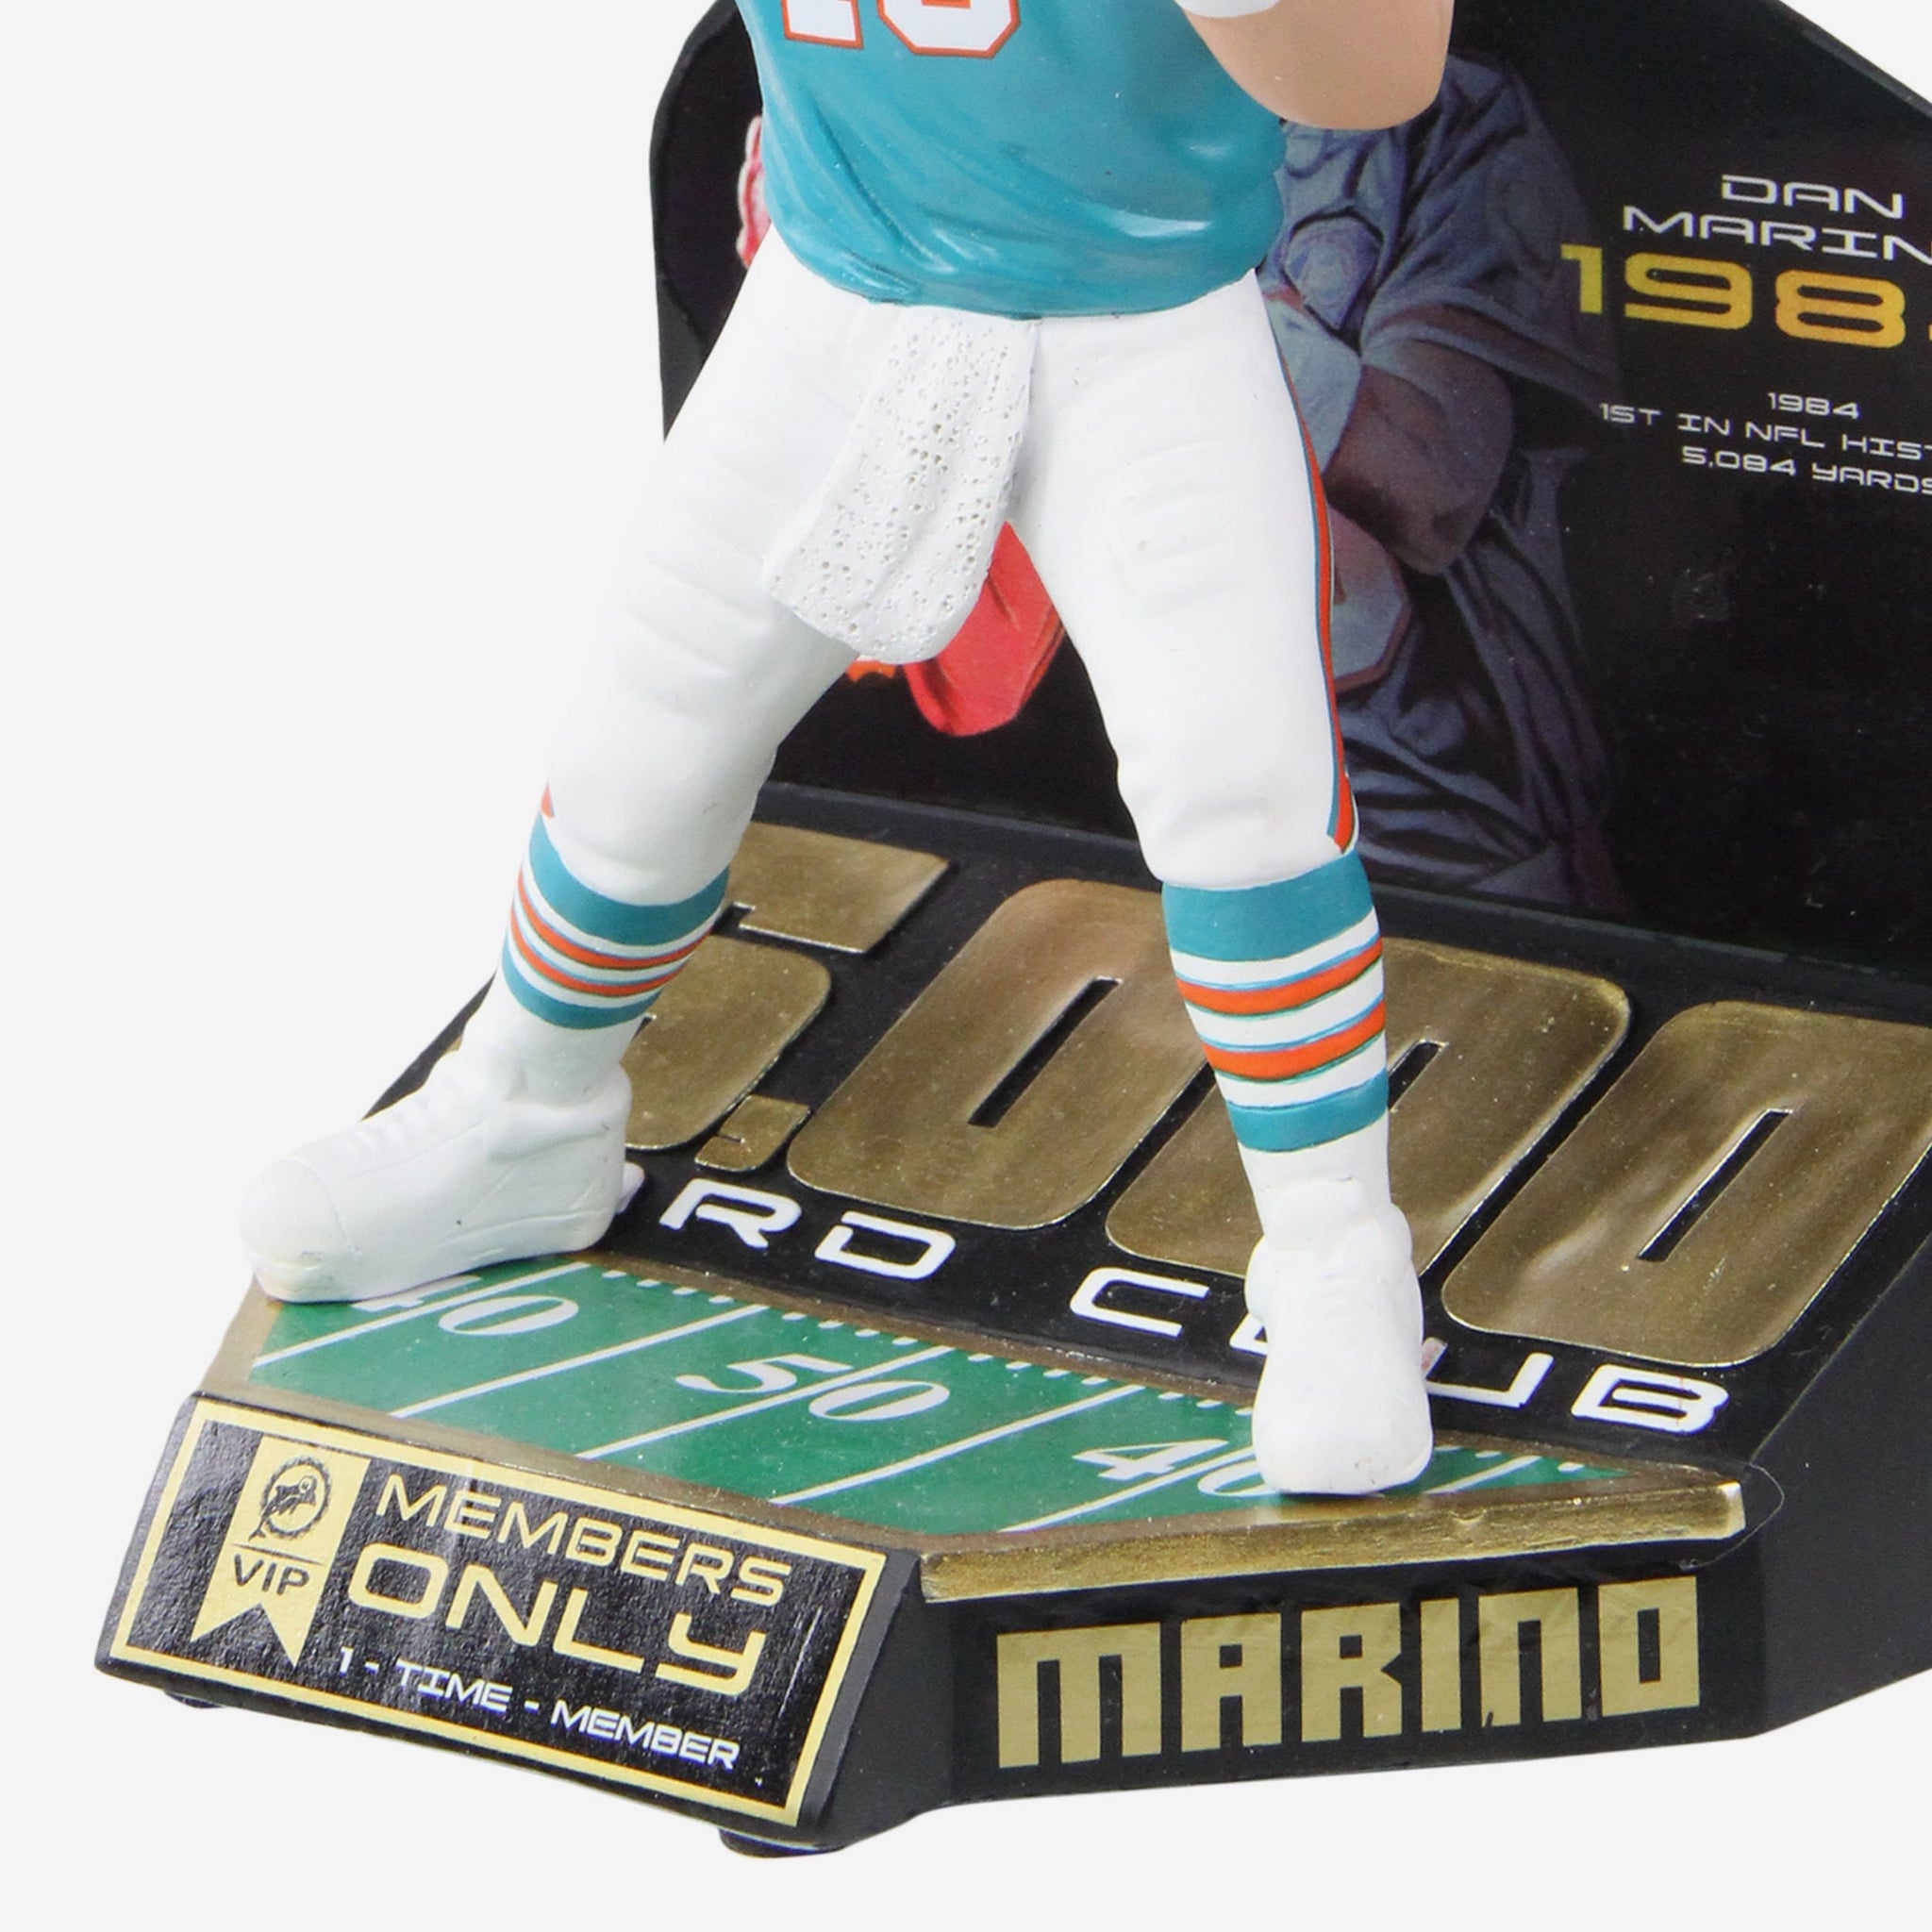 Miami Dolphins fans need this Dan Marino 5,000 Yards bobblehead